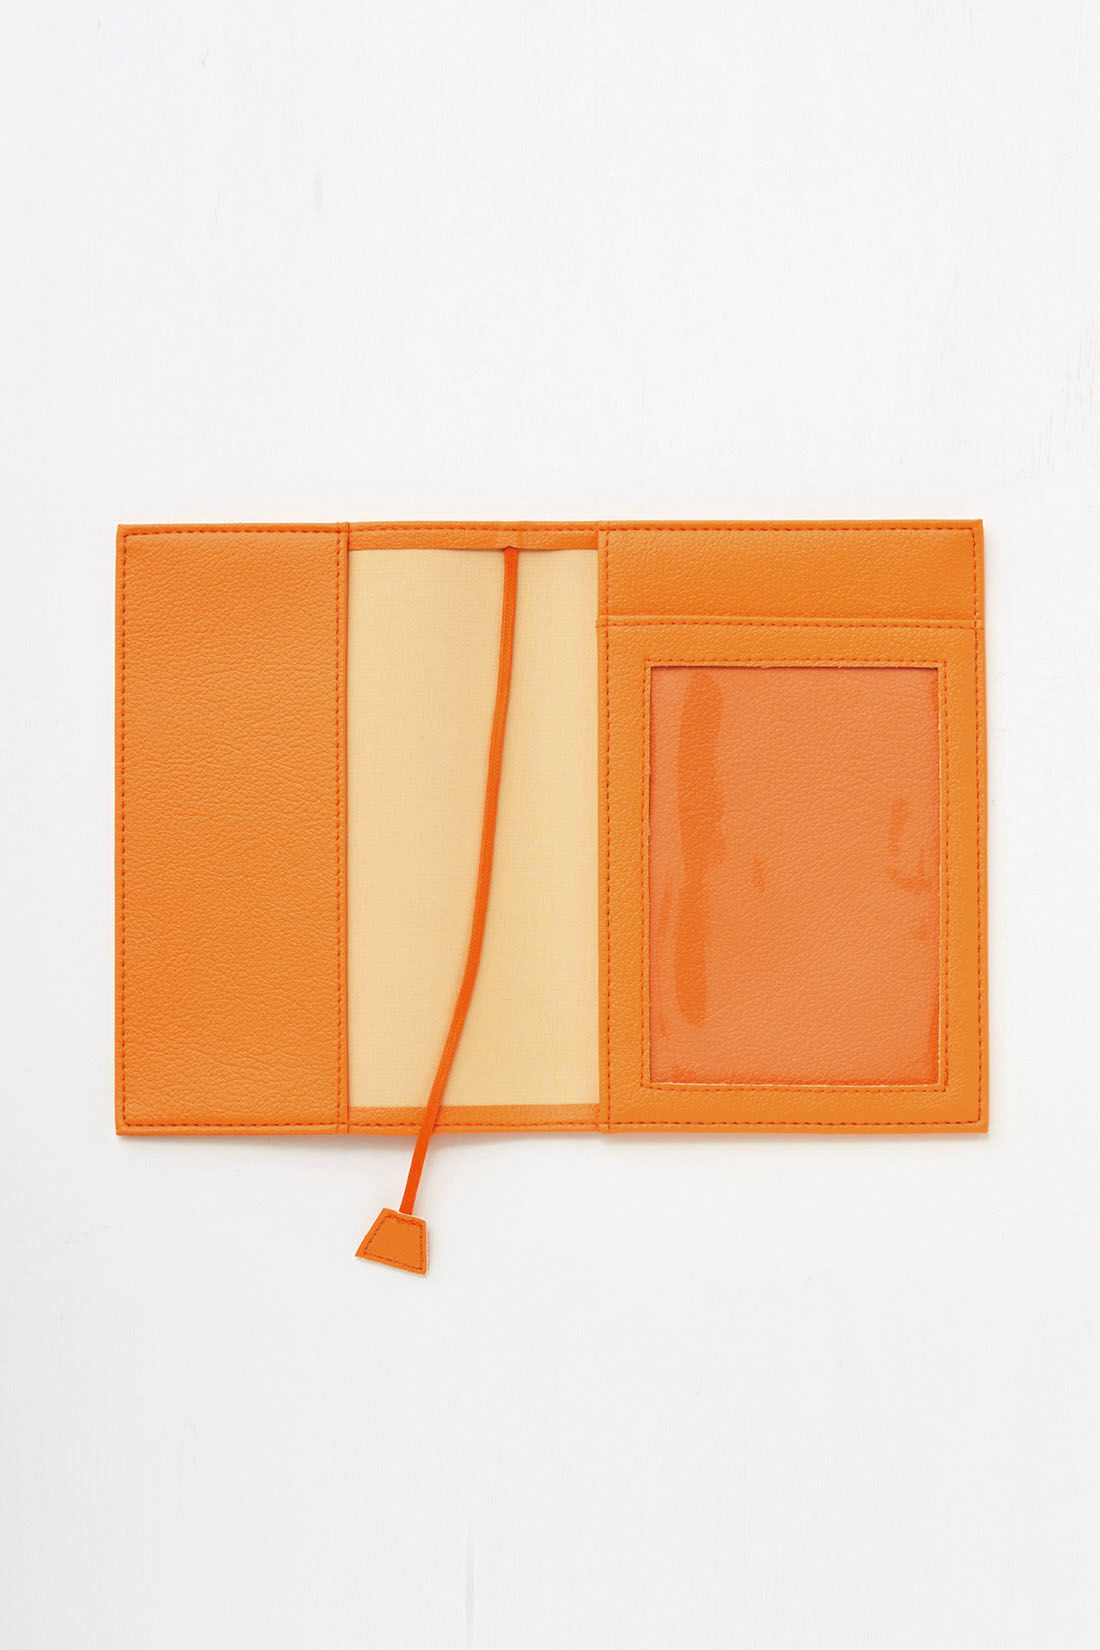 OSYAIRO|OSYAIRO　フォトポケット付き文庫本＆手帳カバー〈橙〉|内側も推し色で、配色ひものしおり付き。フォトポケットには写真やアクスタなど、お気に入りの推しを入れてください。